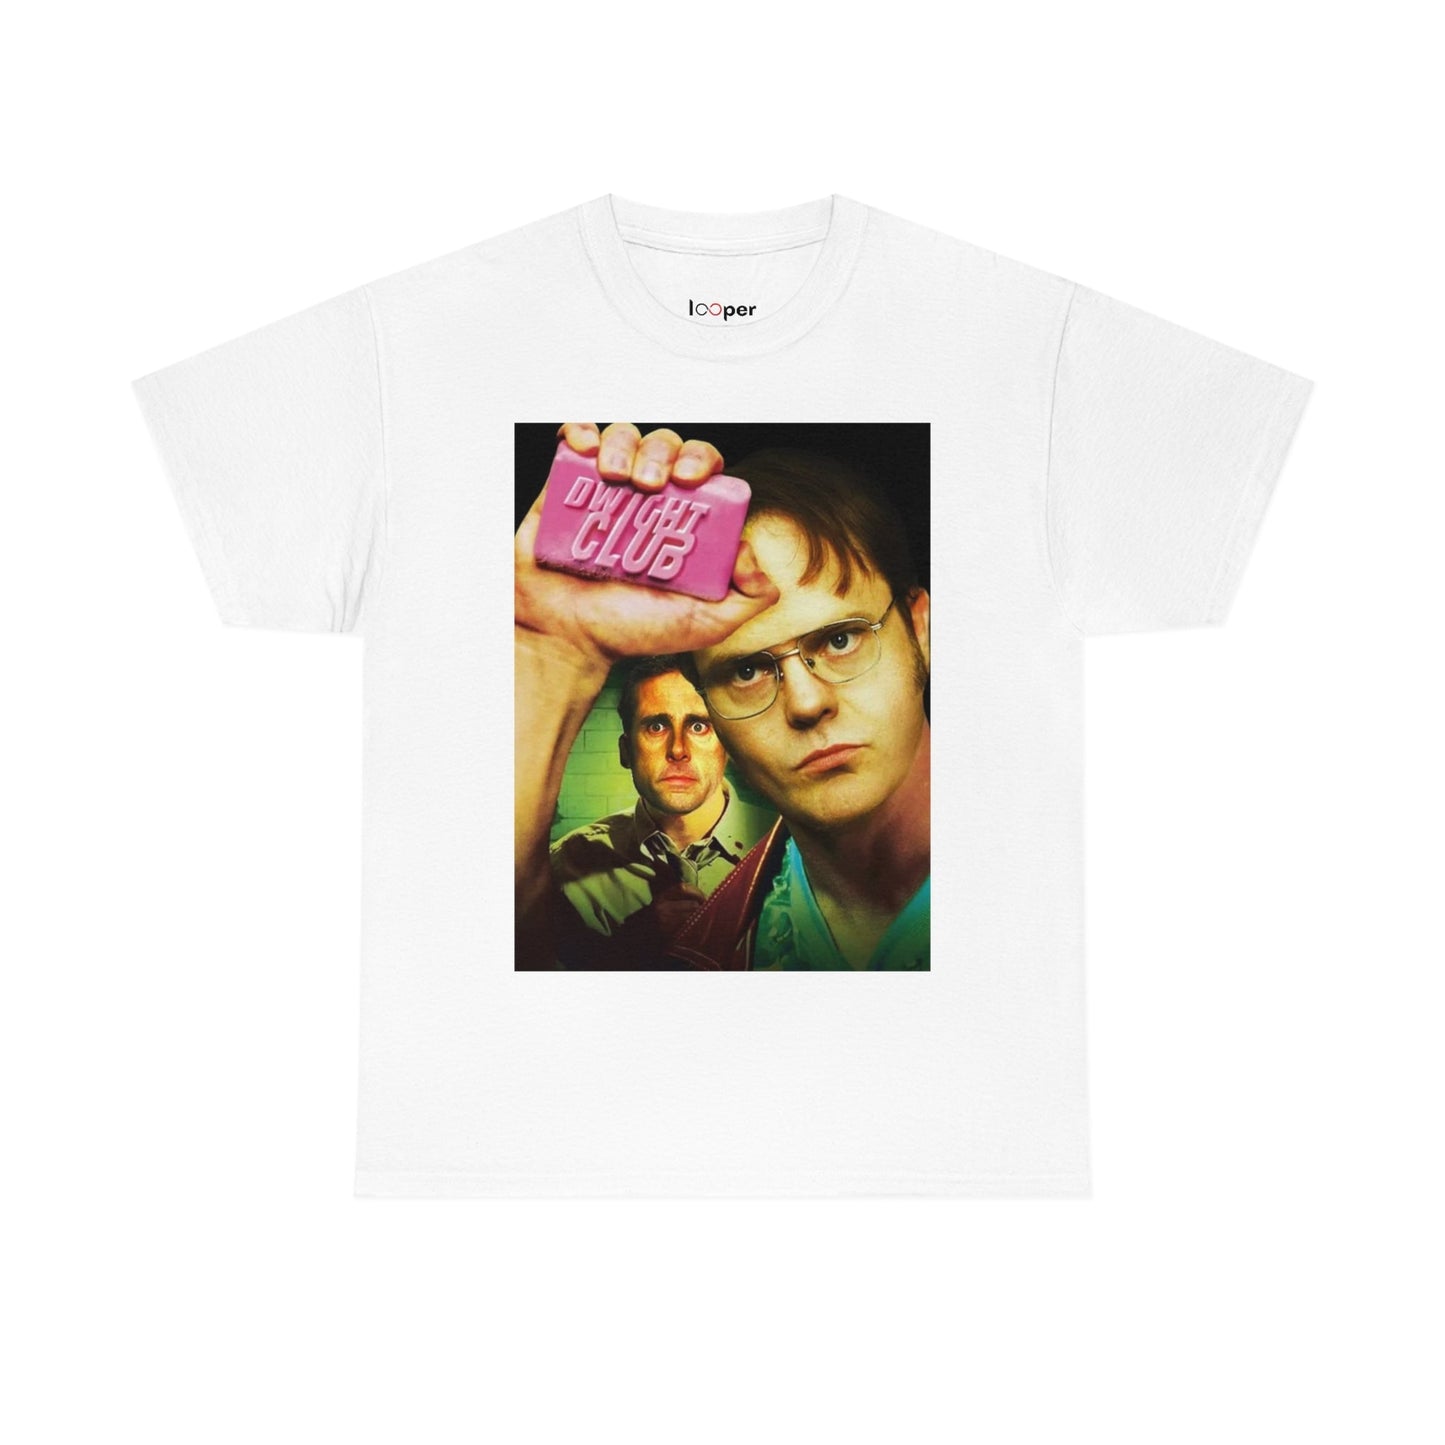 Dwight Club Unisex Printed T-Shirt Looper Tees